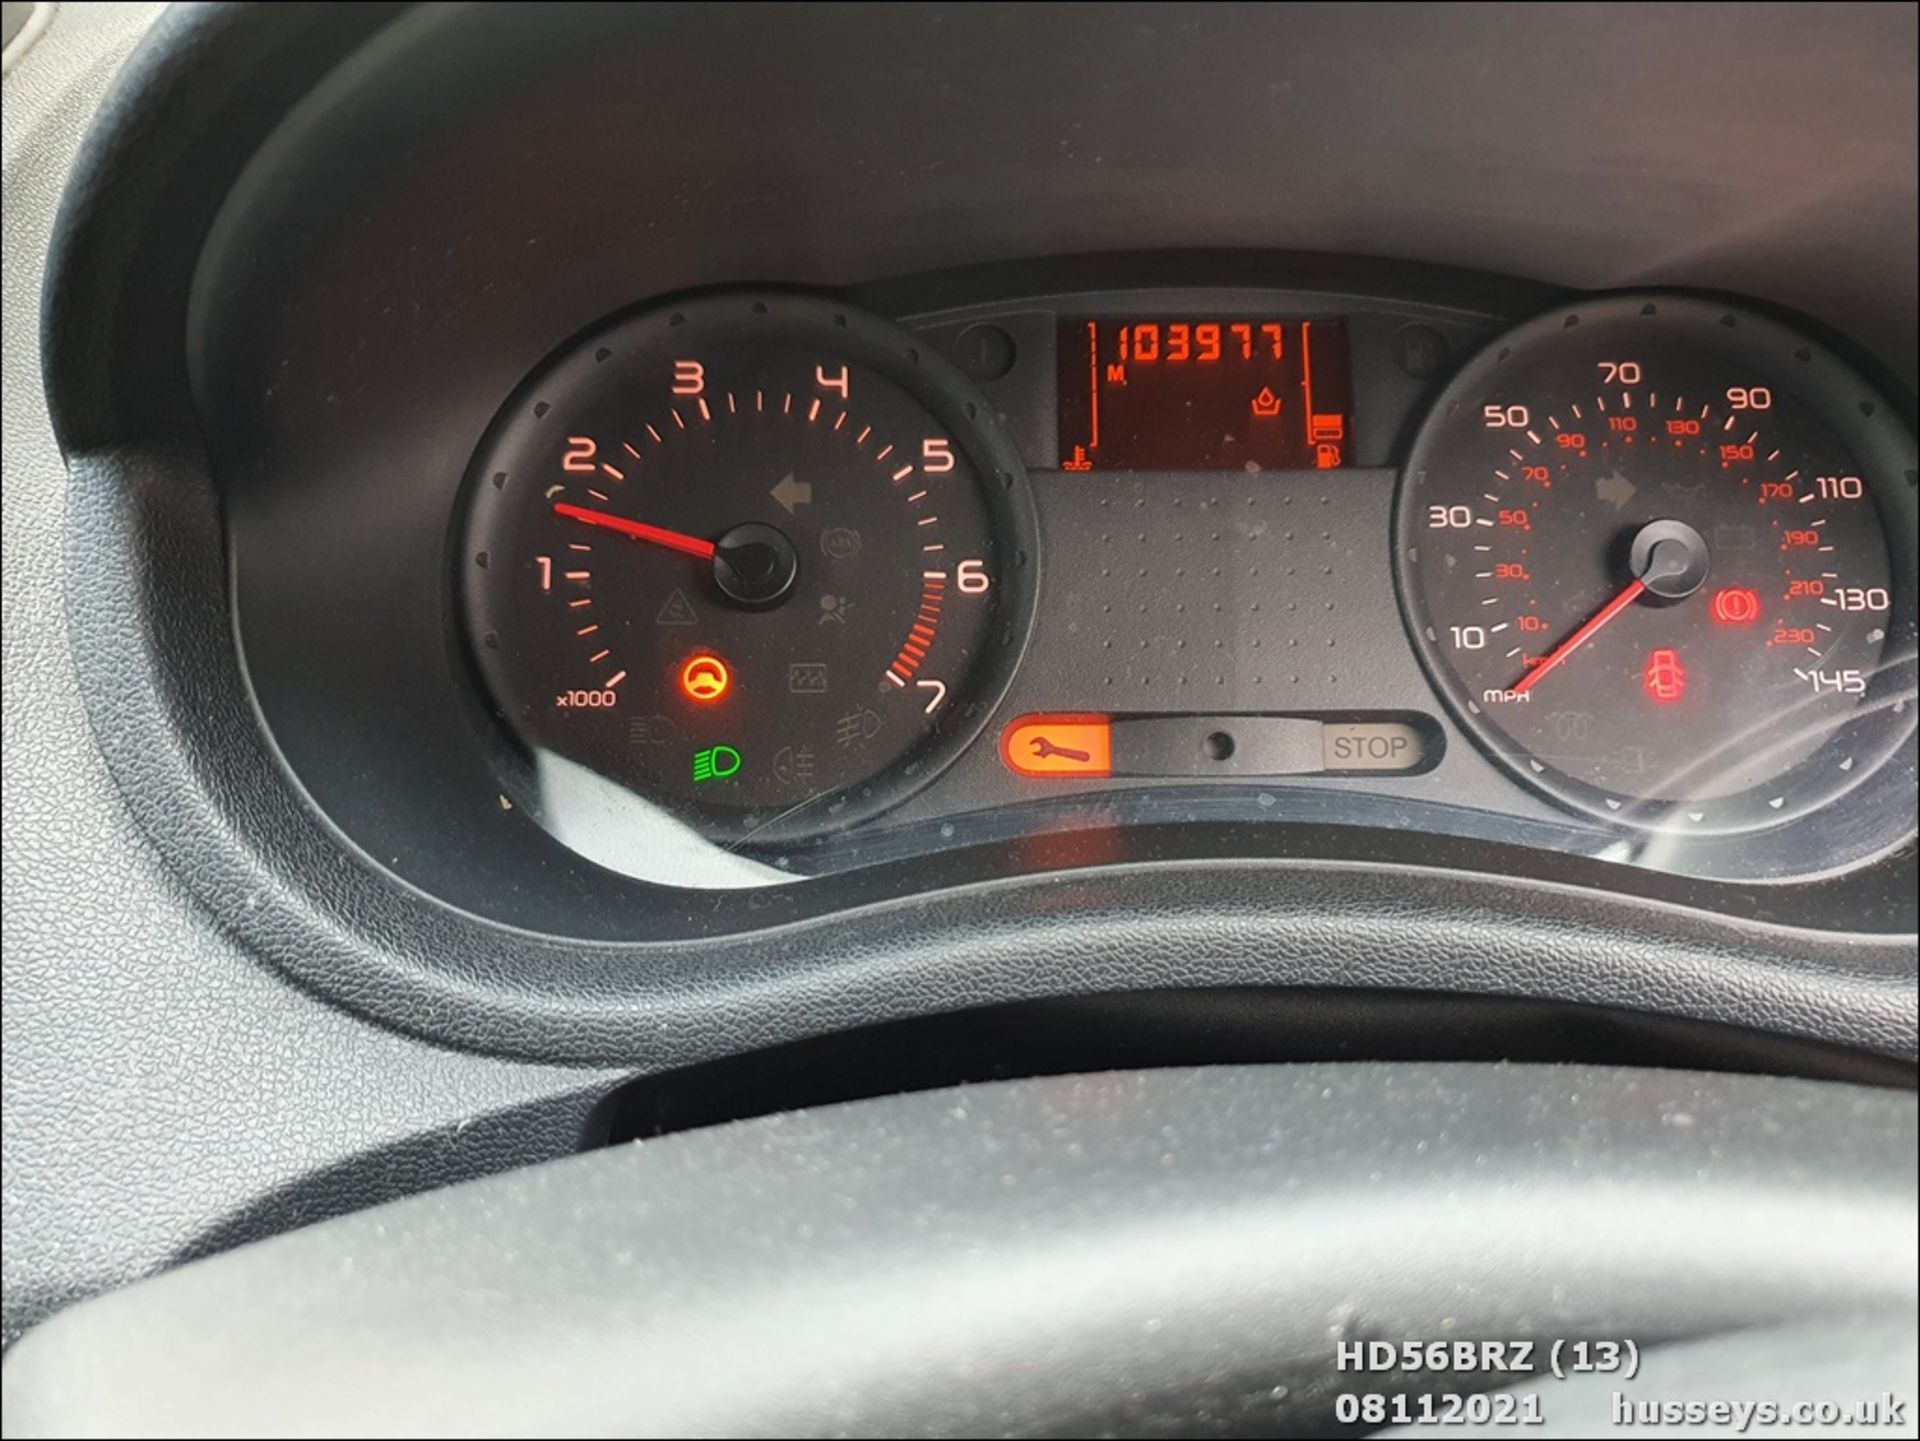 07/56 RENAULT CLIO EXPRESSION - 1390cc 5dr Hatchback (Silver, 103k) - Image 13 of 15